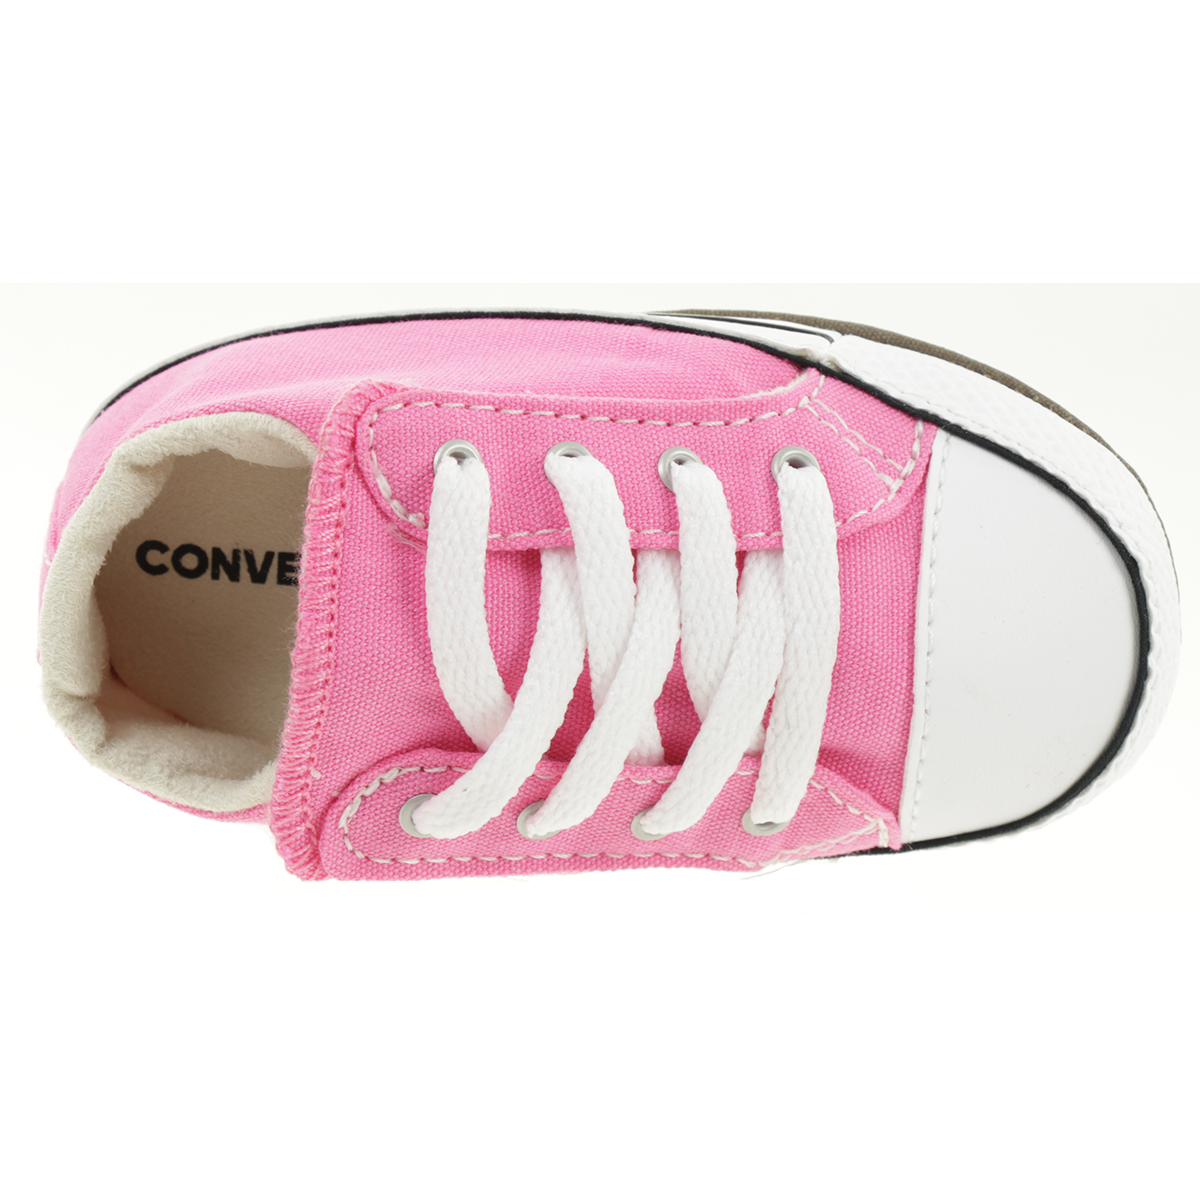 Converse CTAS Cribster Mid Kleinkinder Low Top Sneaker 865160C Pink